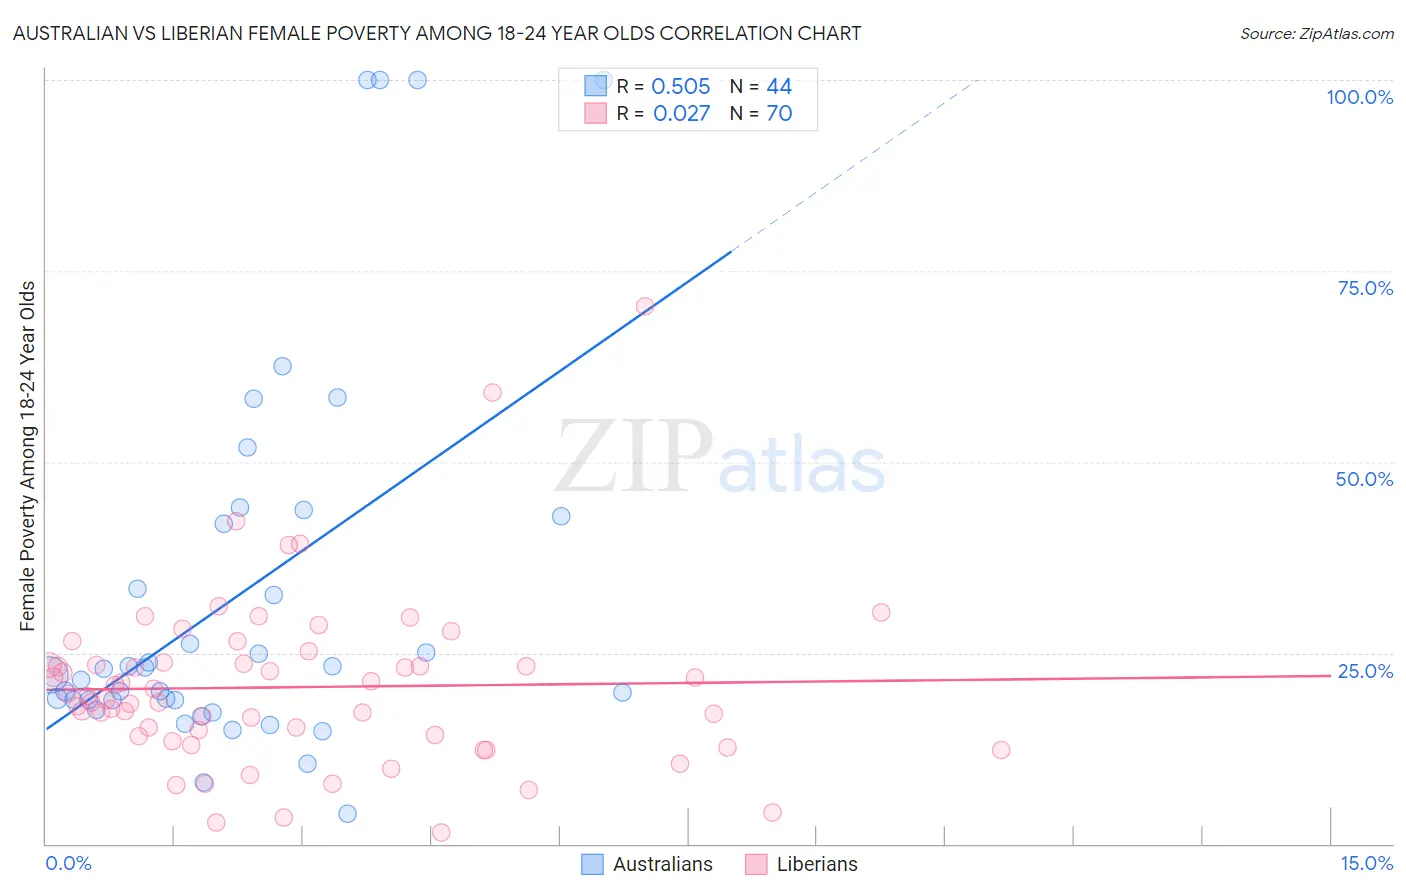 Australian vs Liberian Female Poverty Among 18-24 Year Olds